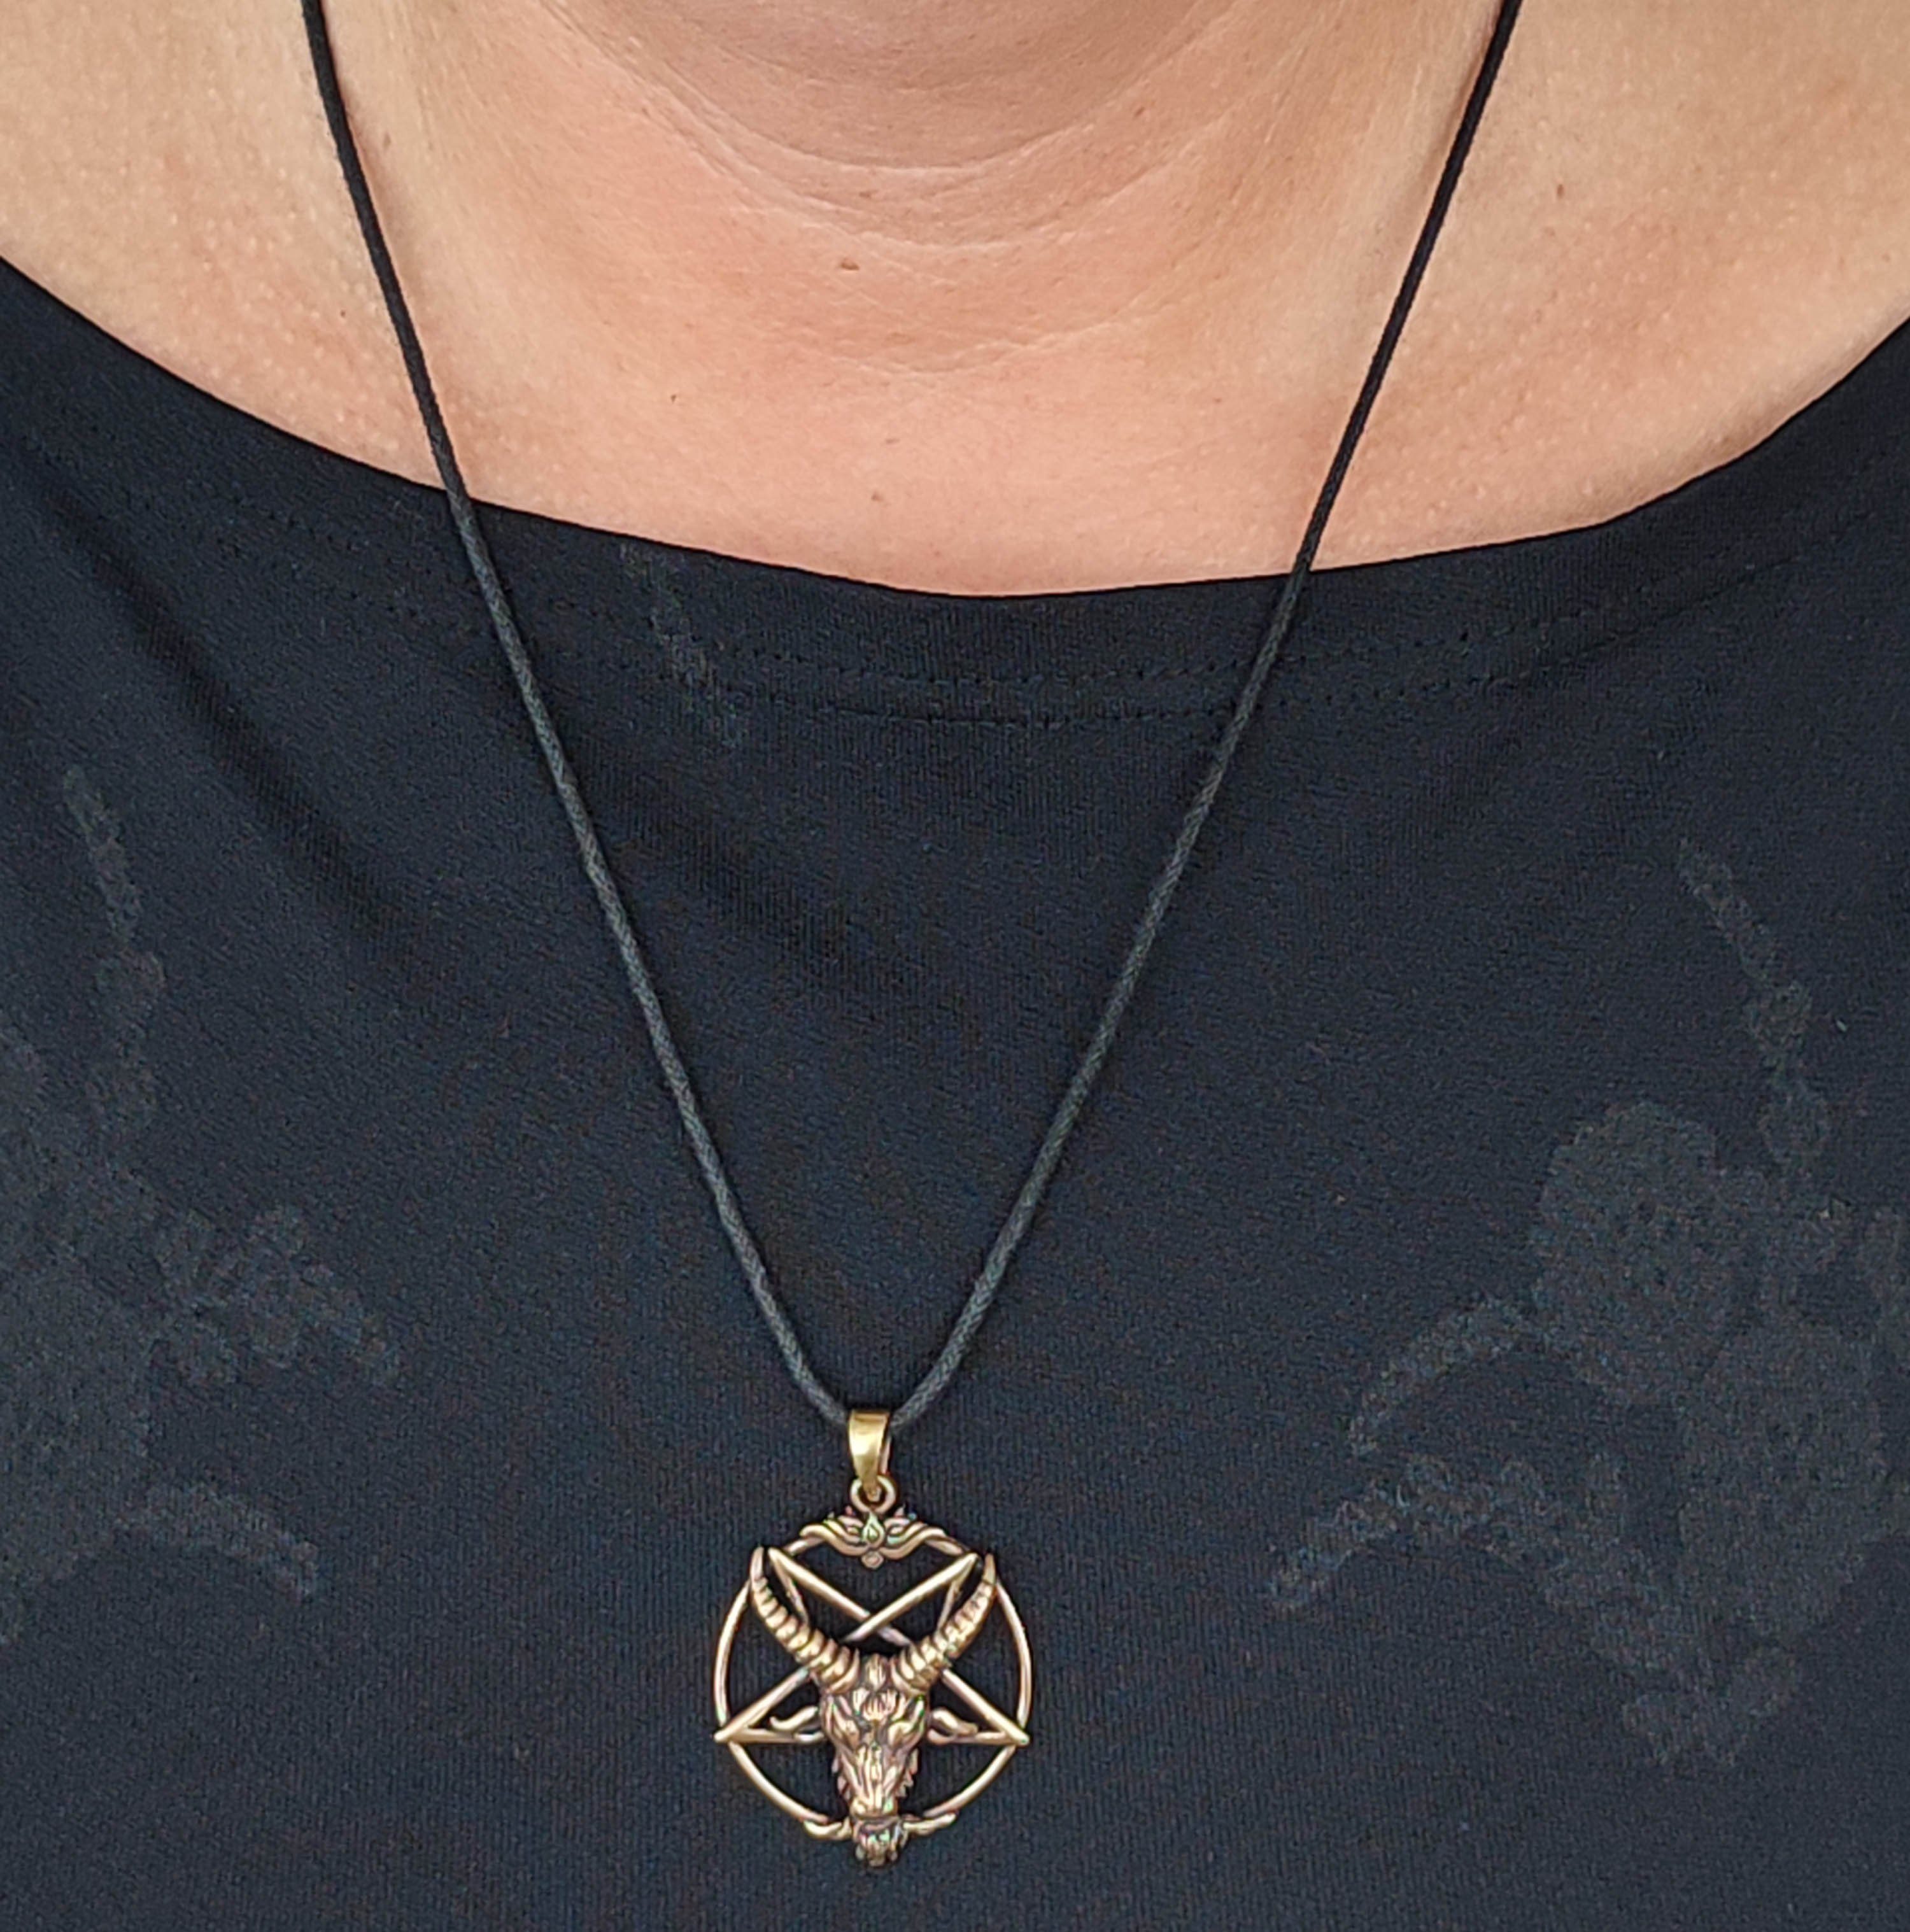 Magie Bronze Anhänger Leather Drudenfuß Teufel Pentagramm schwarze Kettenanhänger of Satan Kiss Baphomet